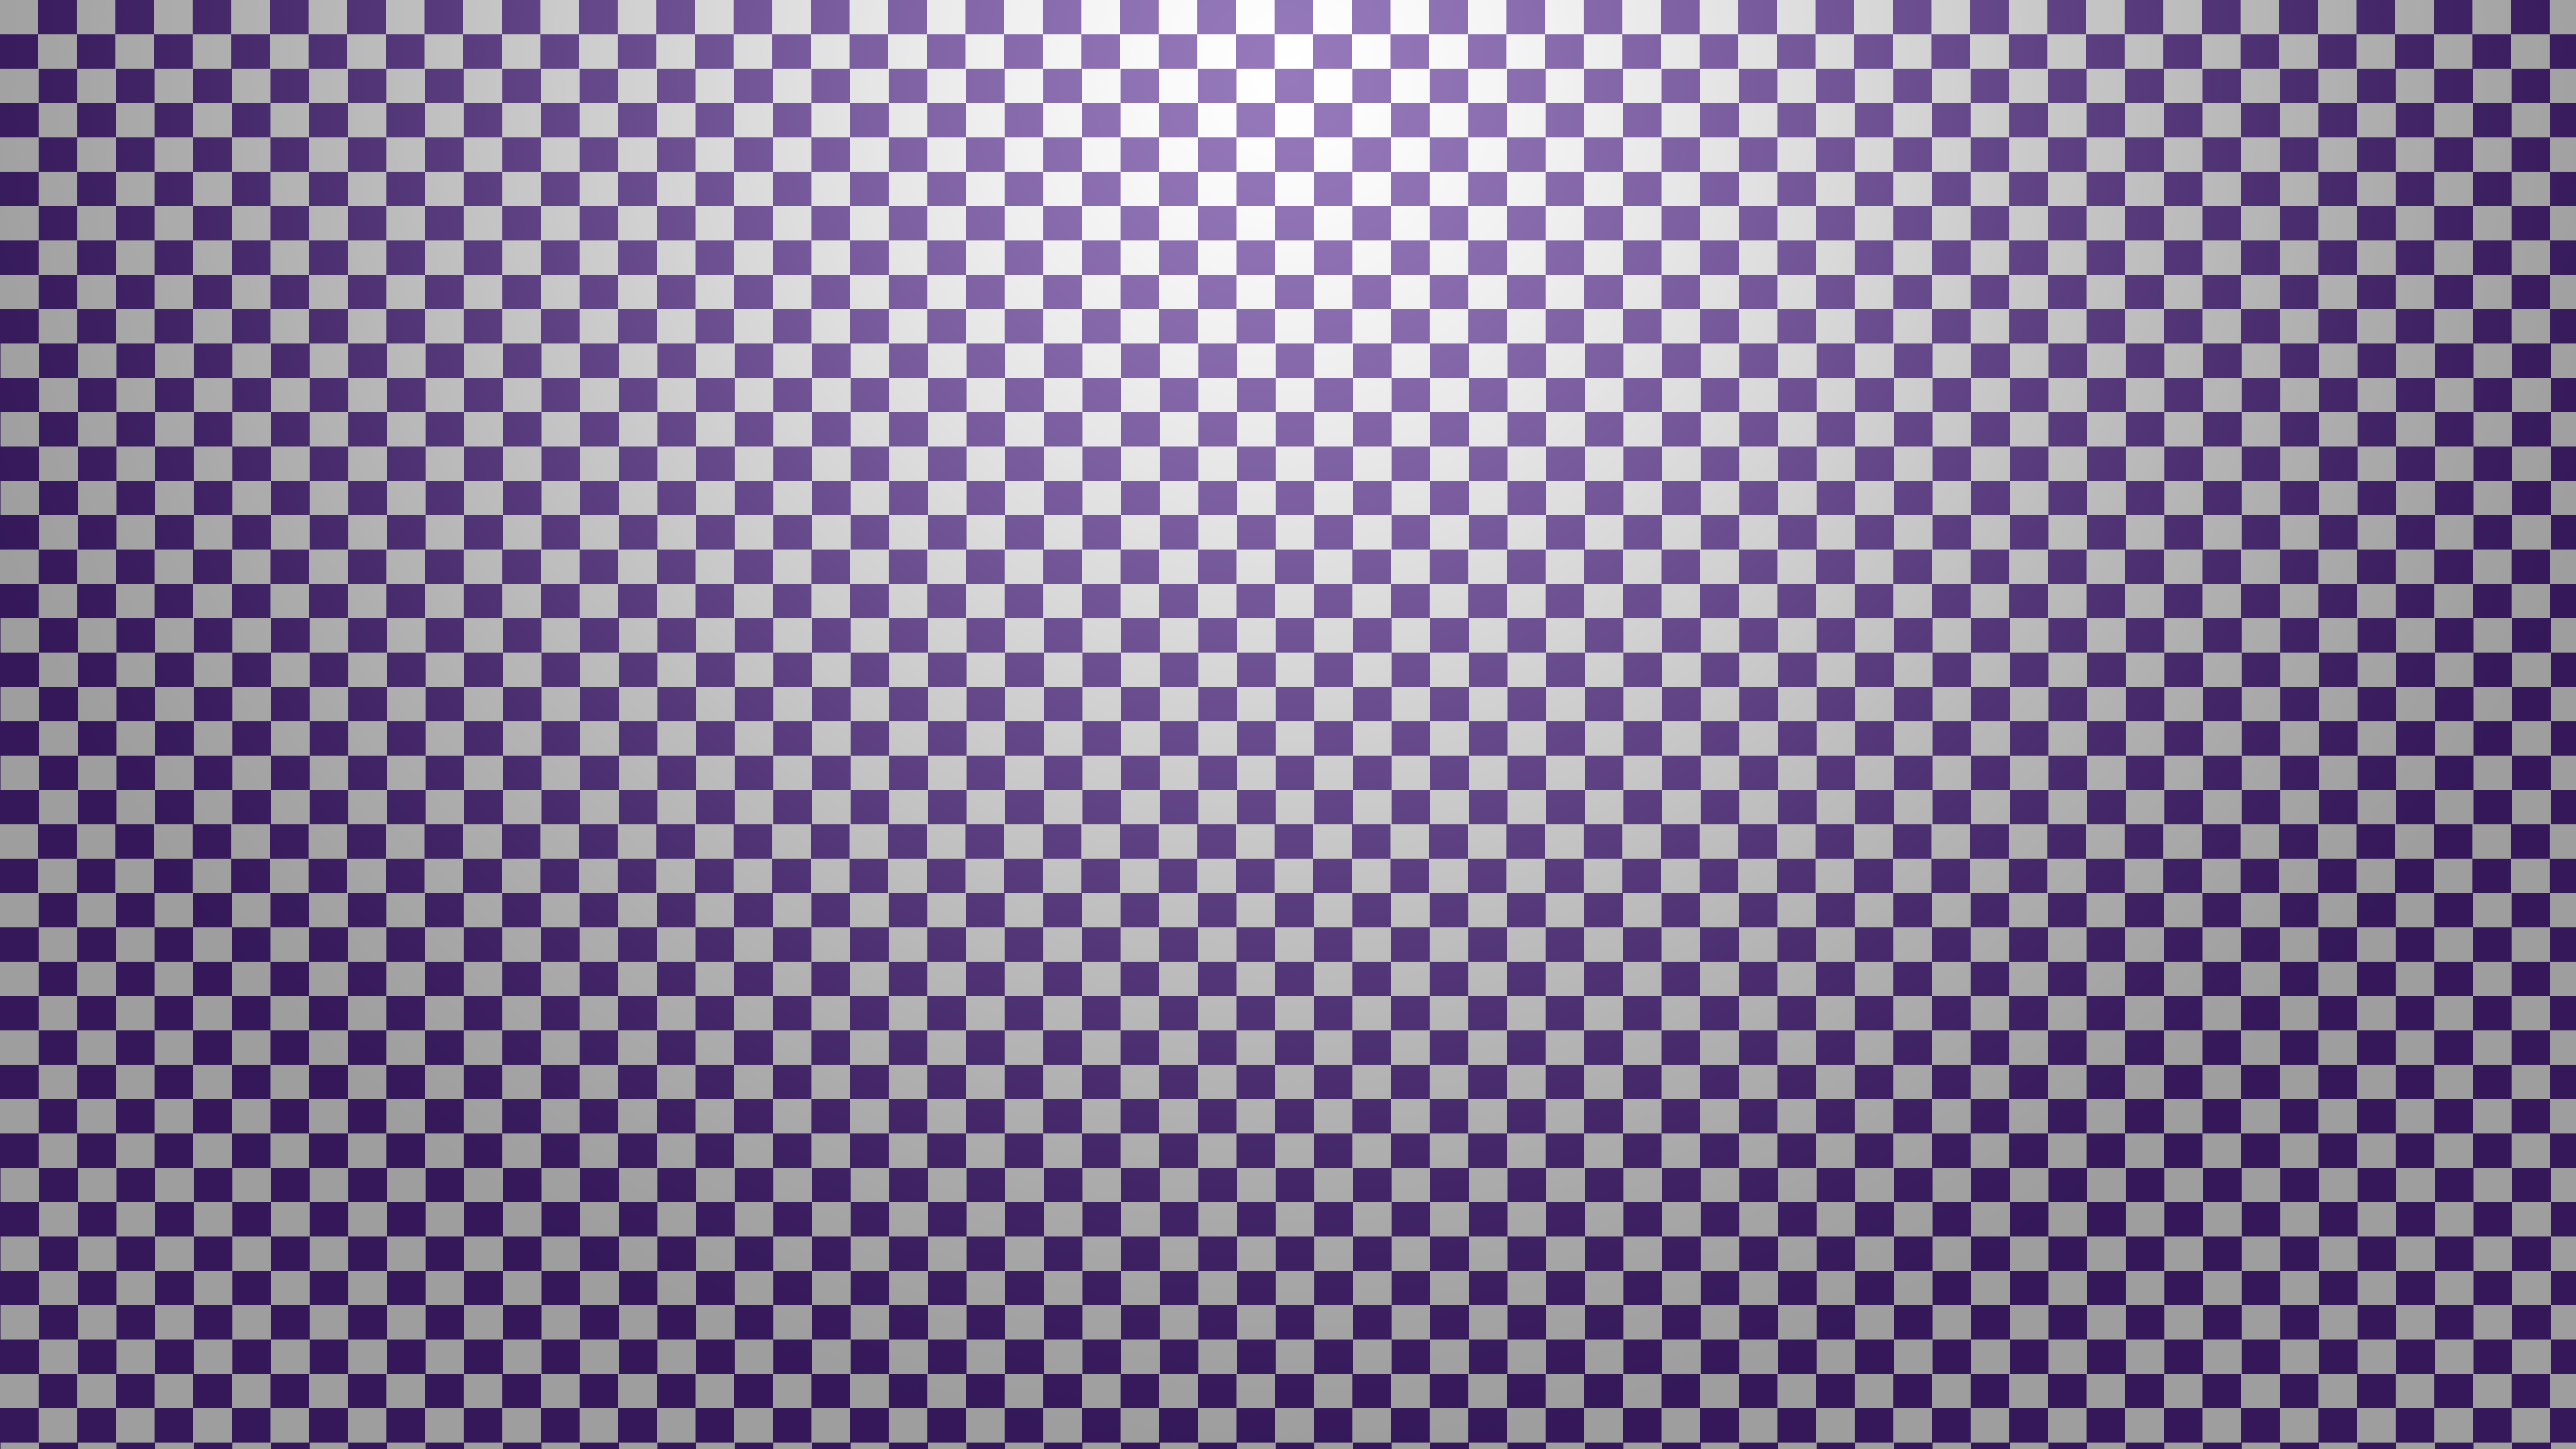 Checkered Computers Desktop  4800x2700  ID   Art